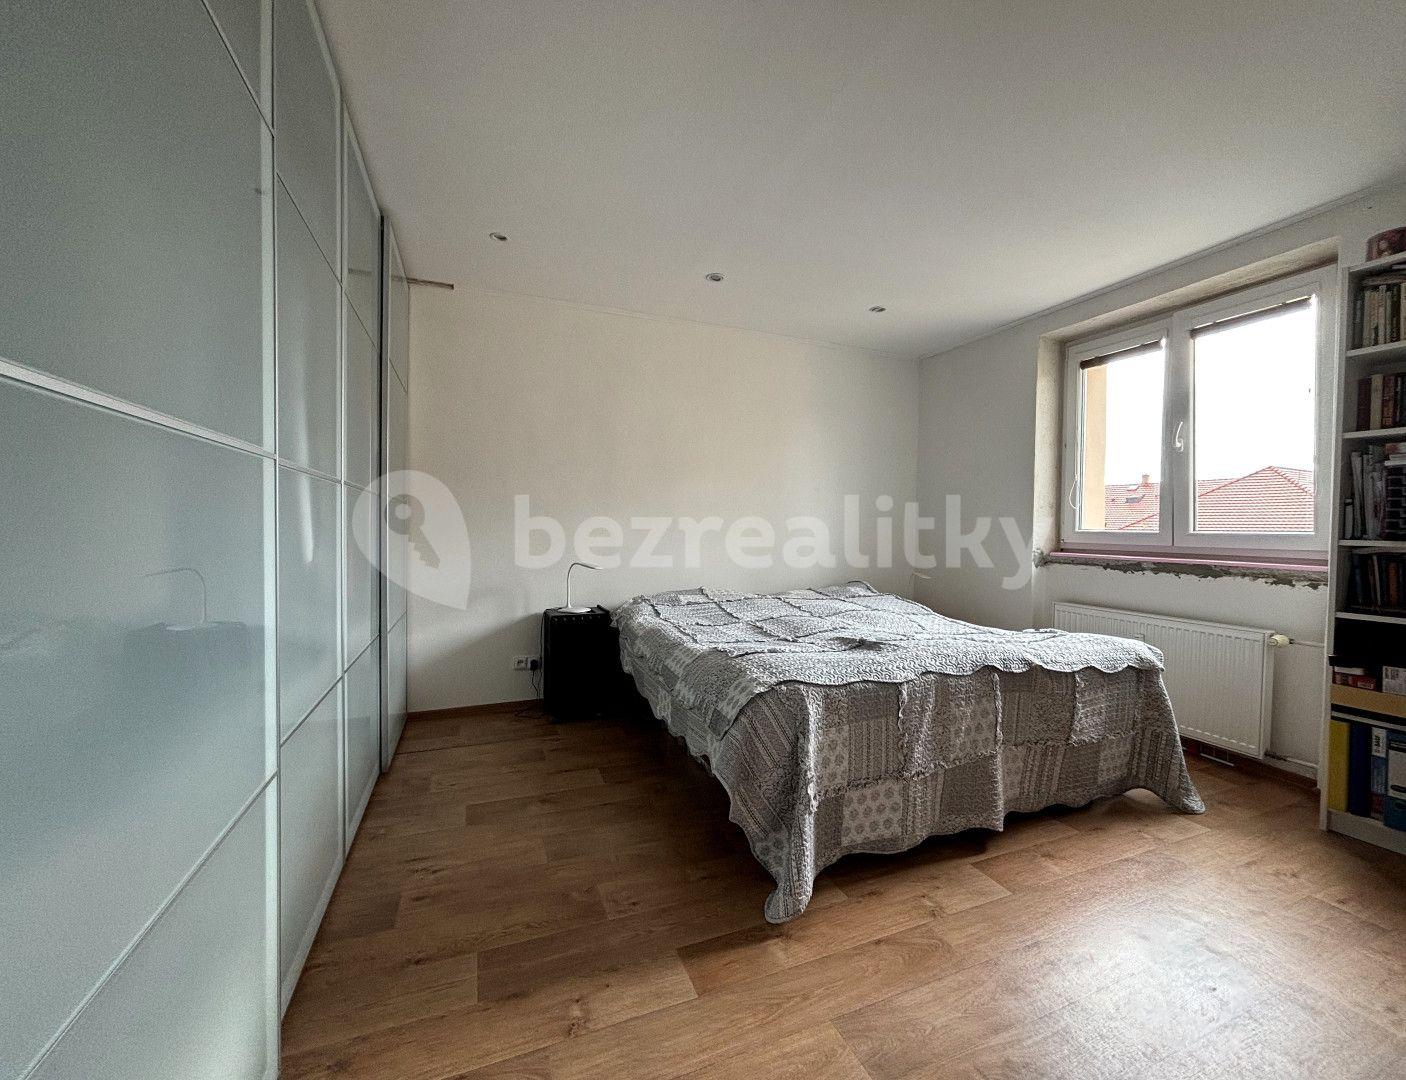 3 bedroom flat for sale, 73 m², Teplická, Litoměřice, Ústecký Region